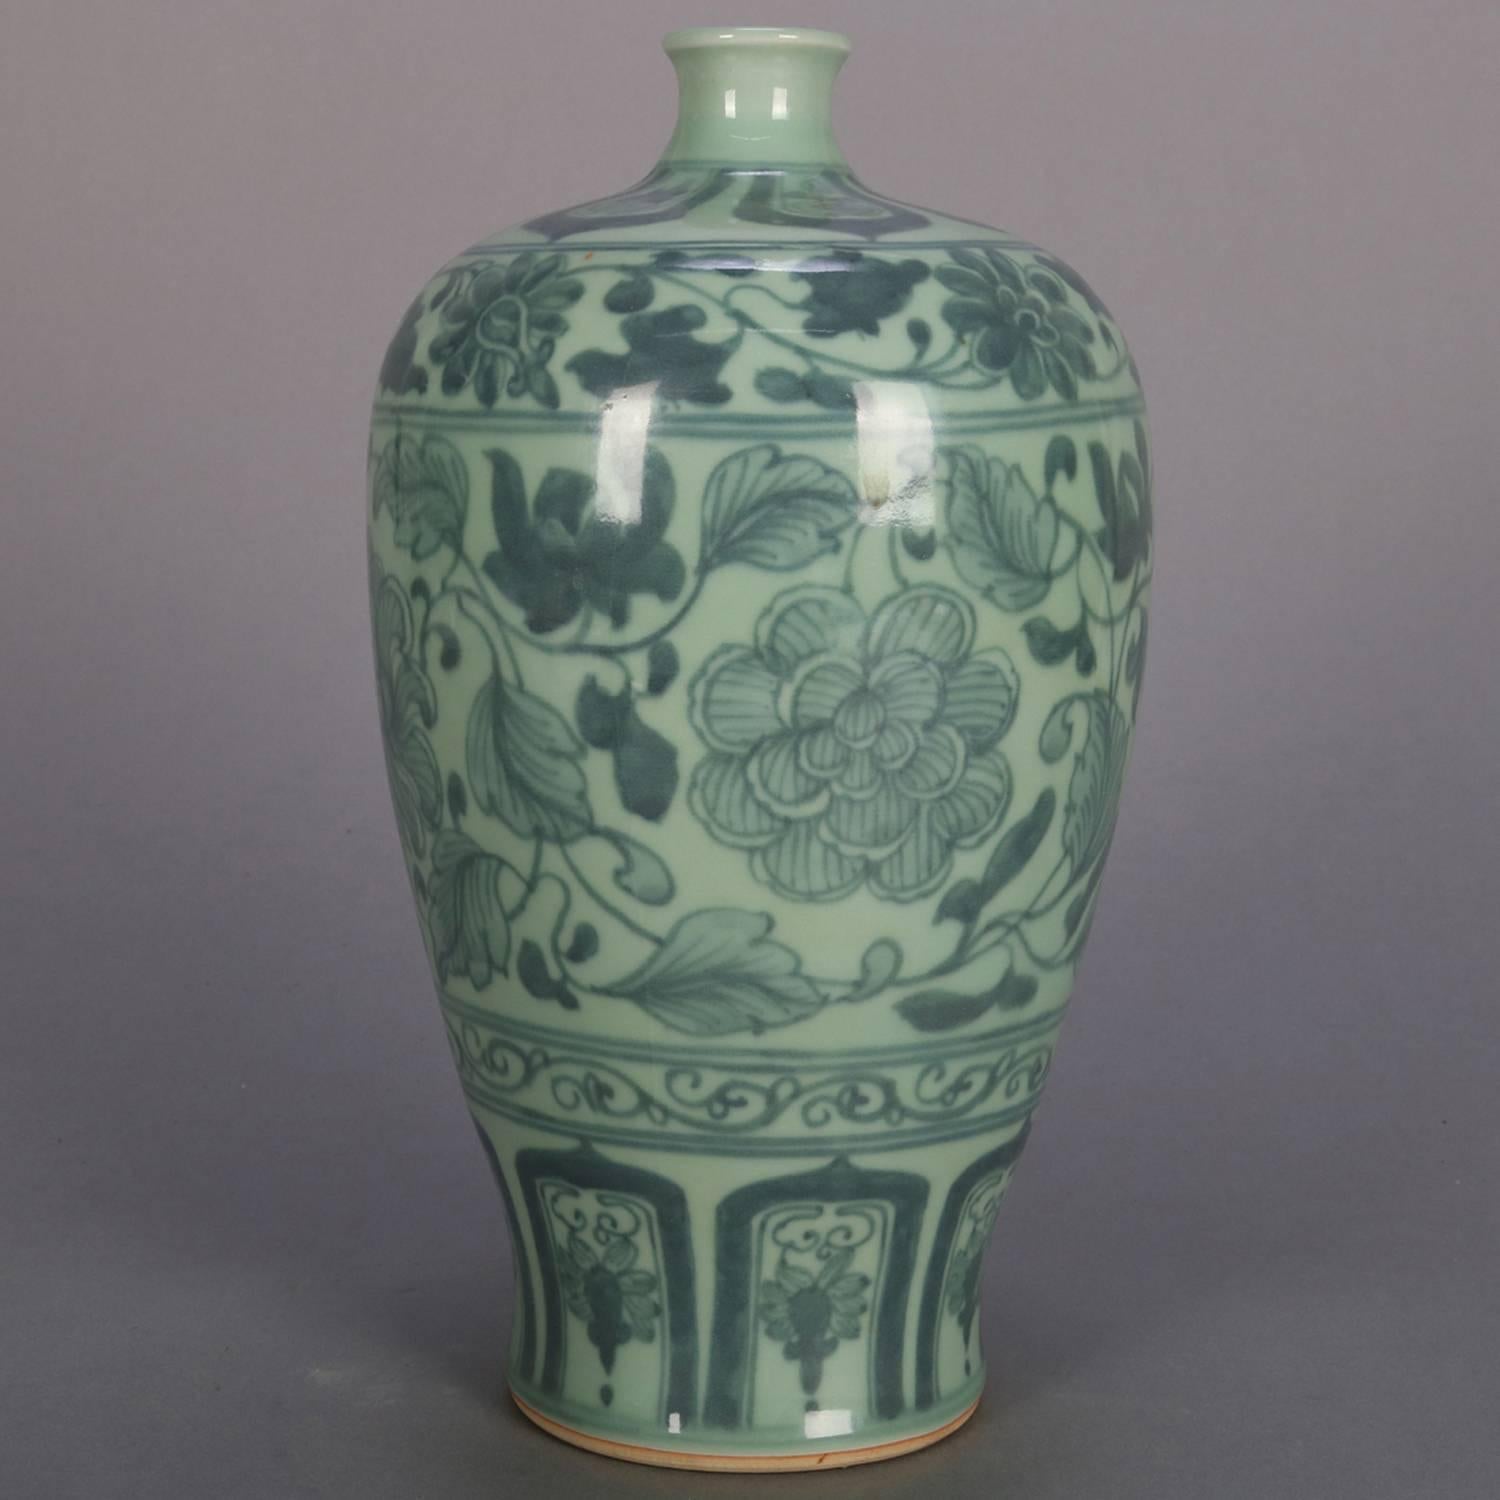 Glazed Chinese Celadon Porcelain Vase, Floral and Leaf Decoration, 20th Century